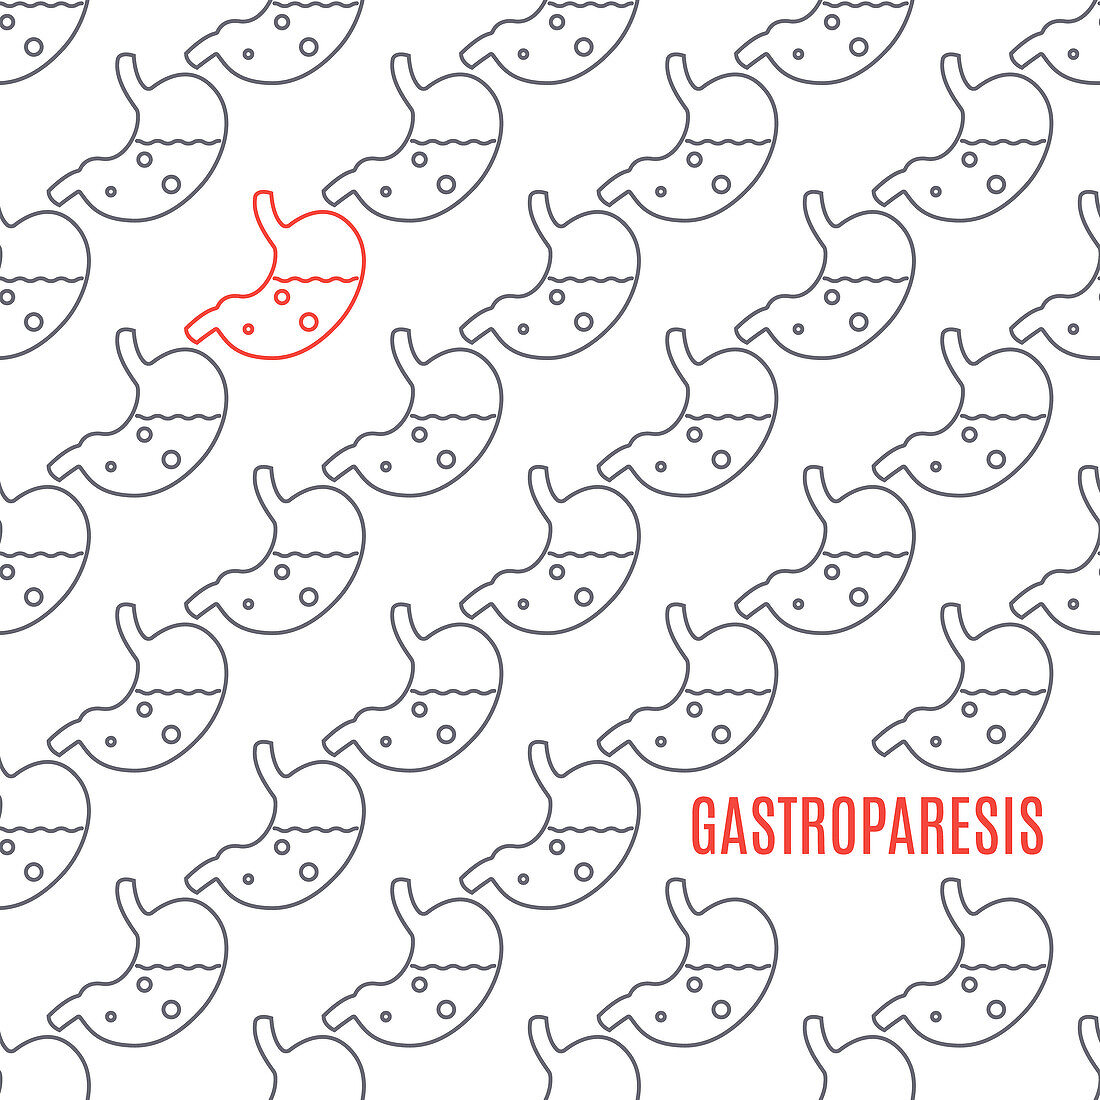 Gastroparesis, conceptual illustration